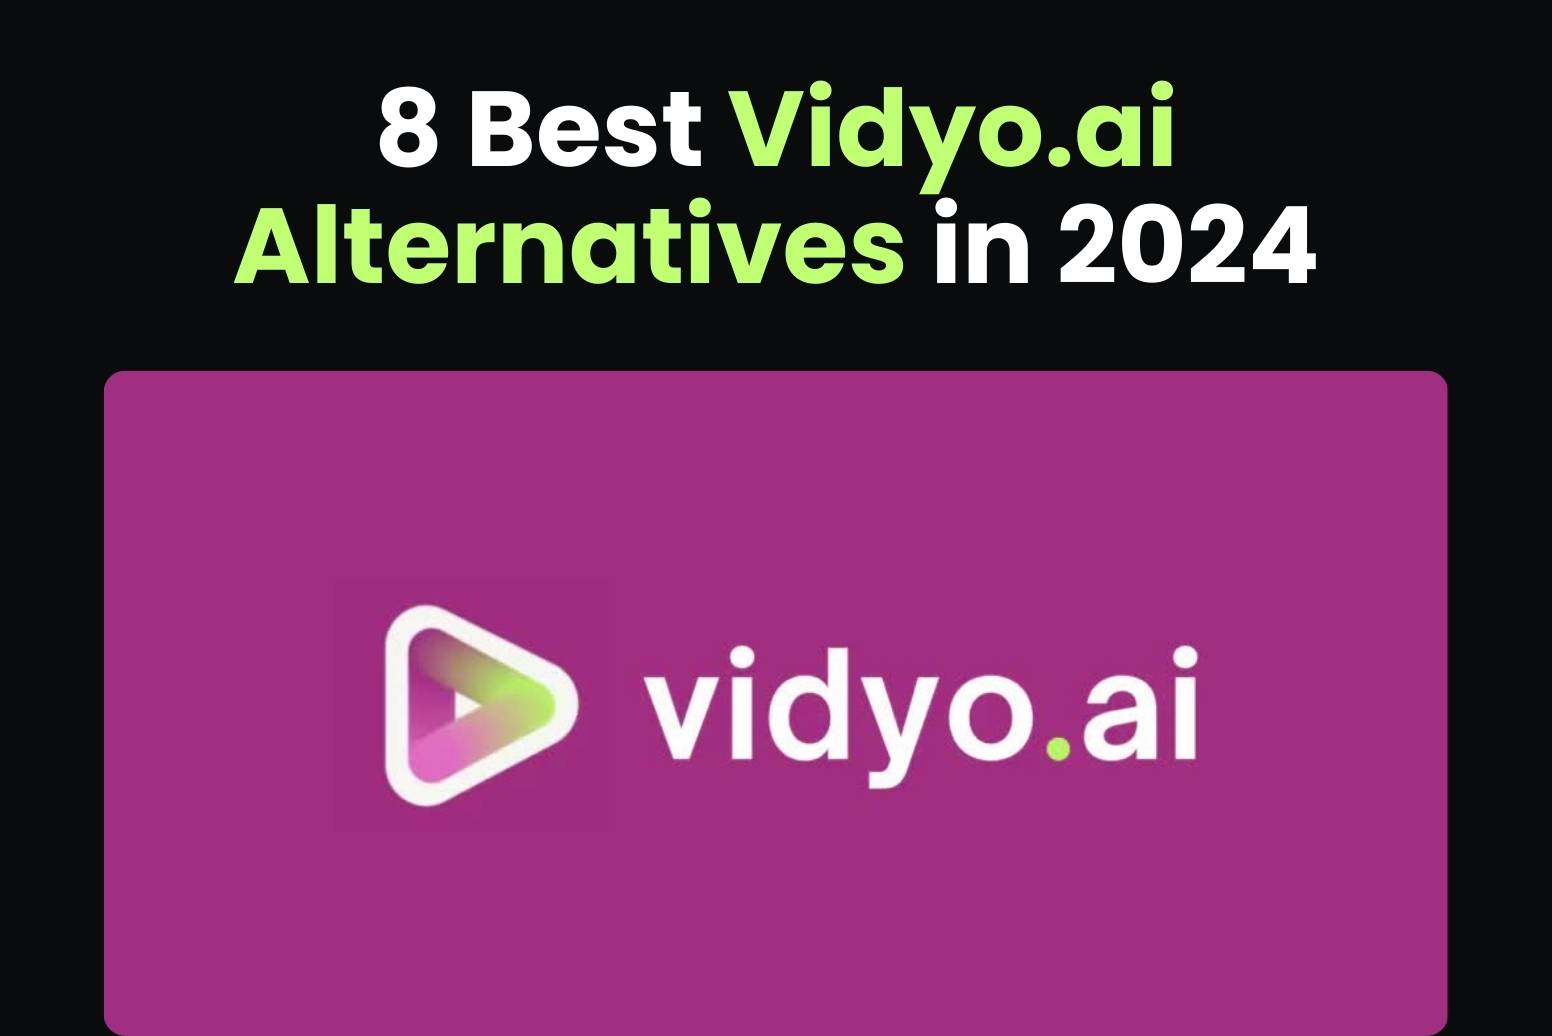 8 Best Vidyo.ai Alternatives in 2024